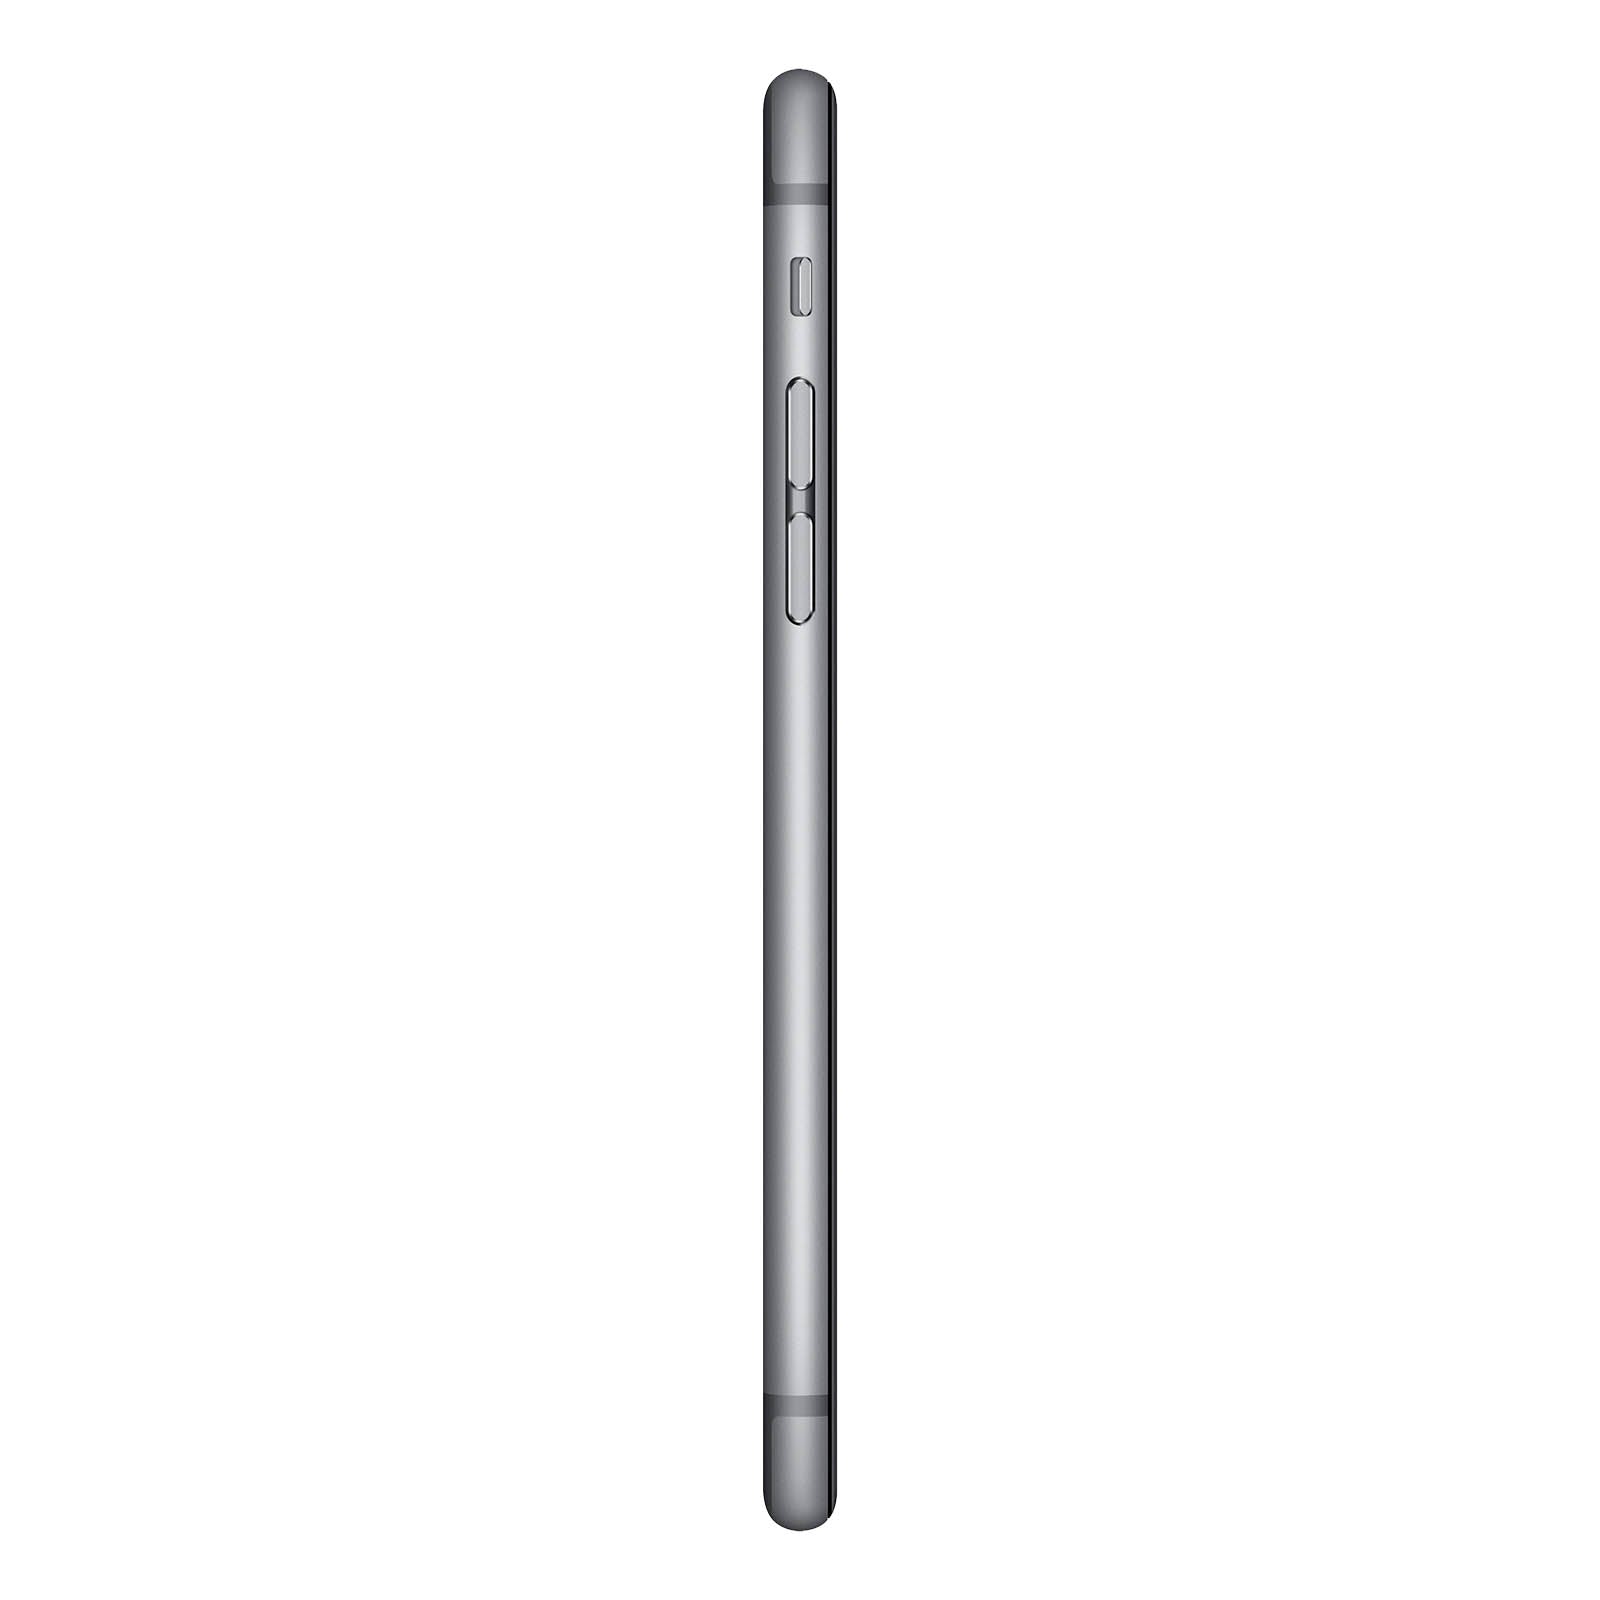 Apple iPhone 6S 32GB Space Grey Pristine - Unlocked